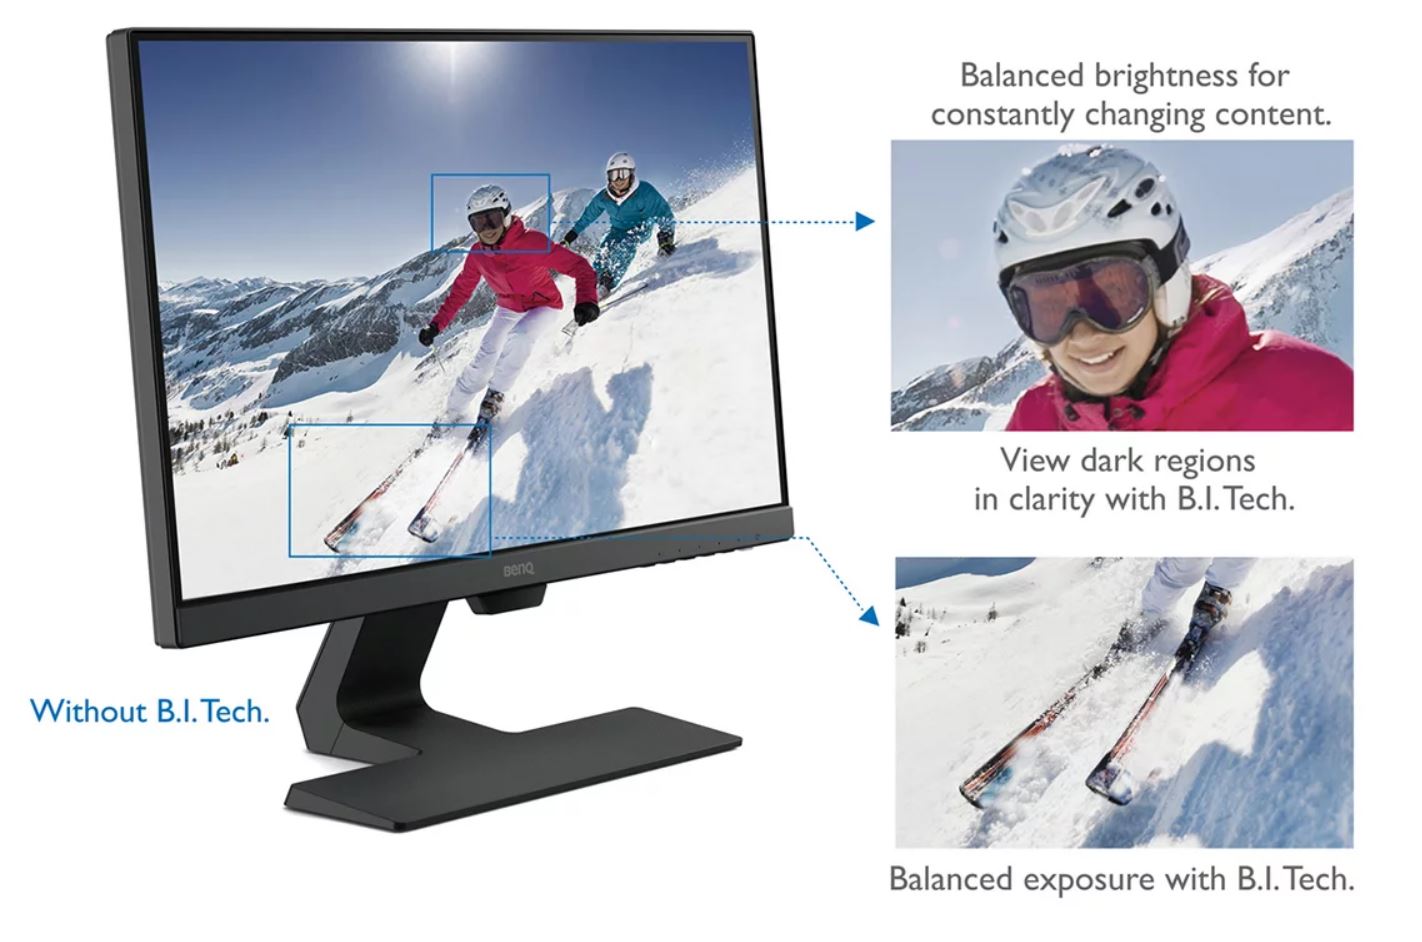 BenQ GW2480 23.8-inch frameless monitor